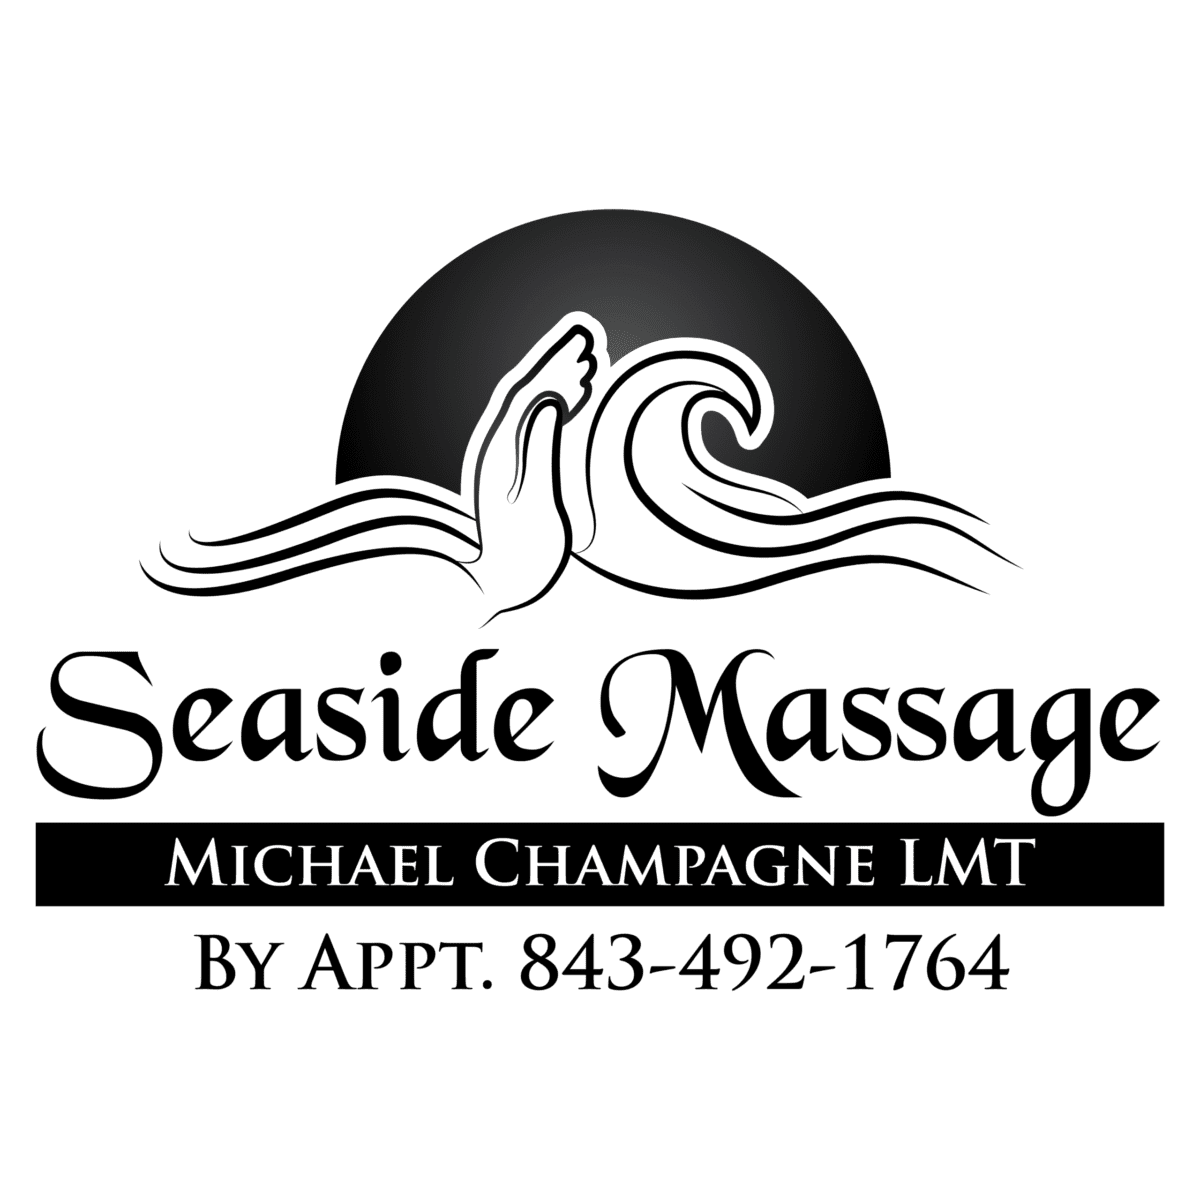 Seaside Massage